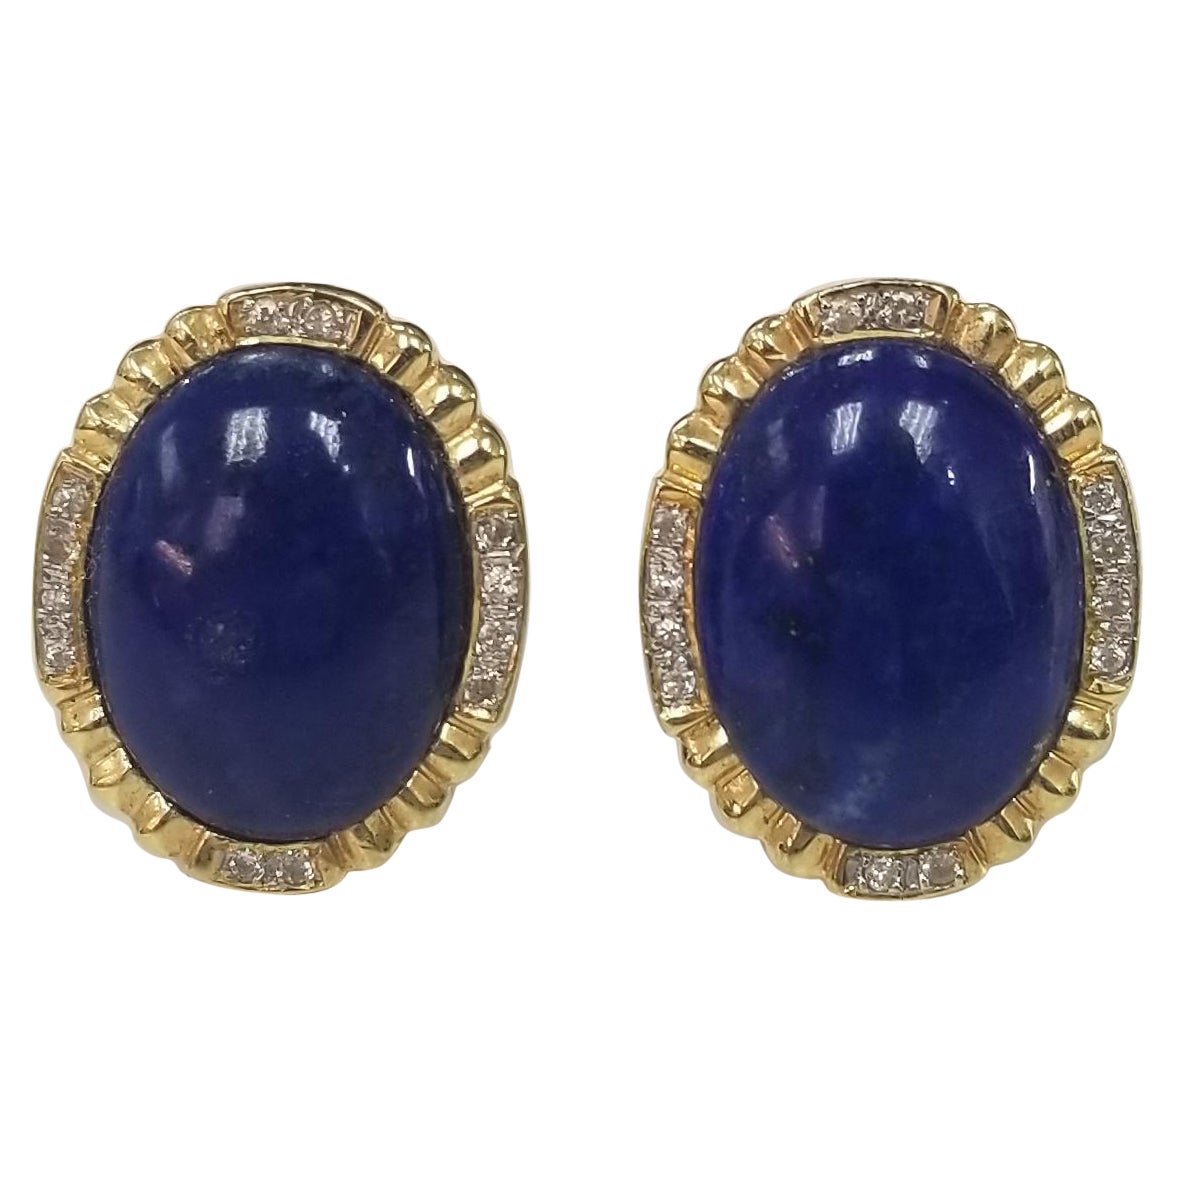 14k Yellow Gold Cabochon Lapis Lazuli and Diamond Earrings